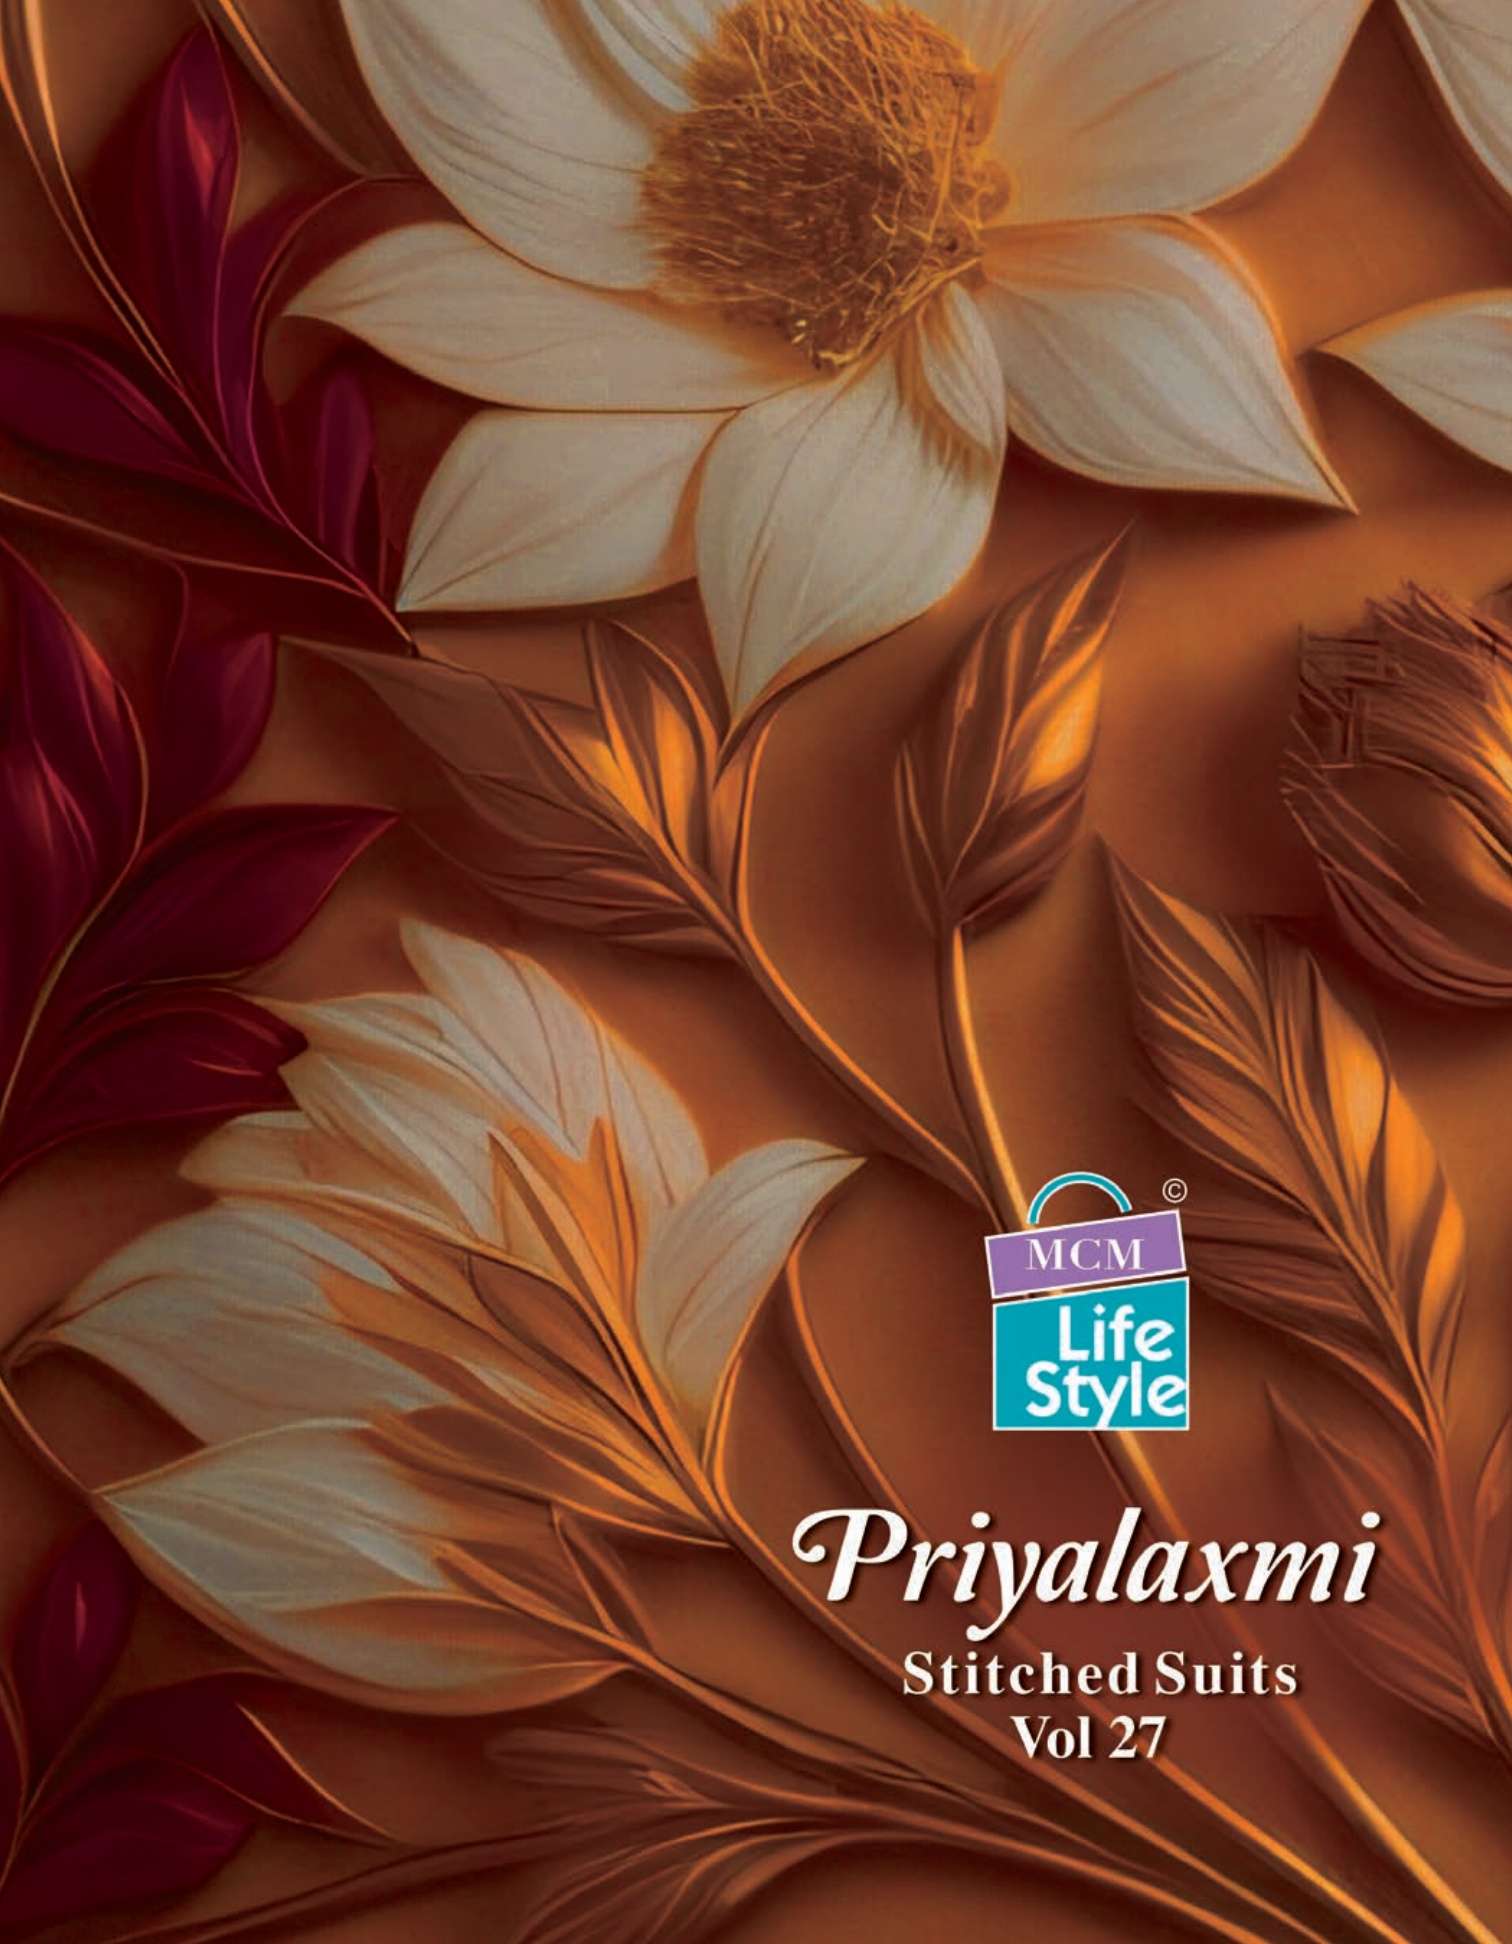 mcm lifestyle priyalaxmi vol-27 2700-2723 series latest designer salwar kameez wholesaler surat gujarat